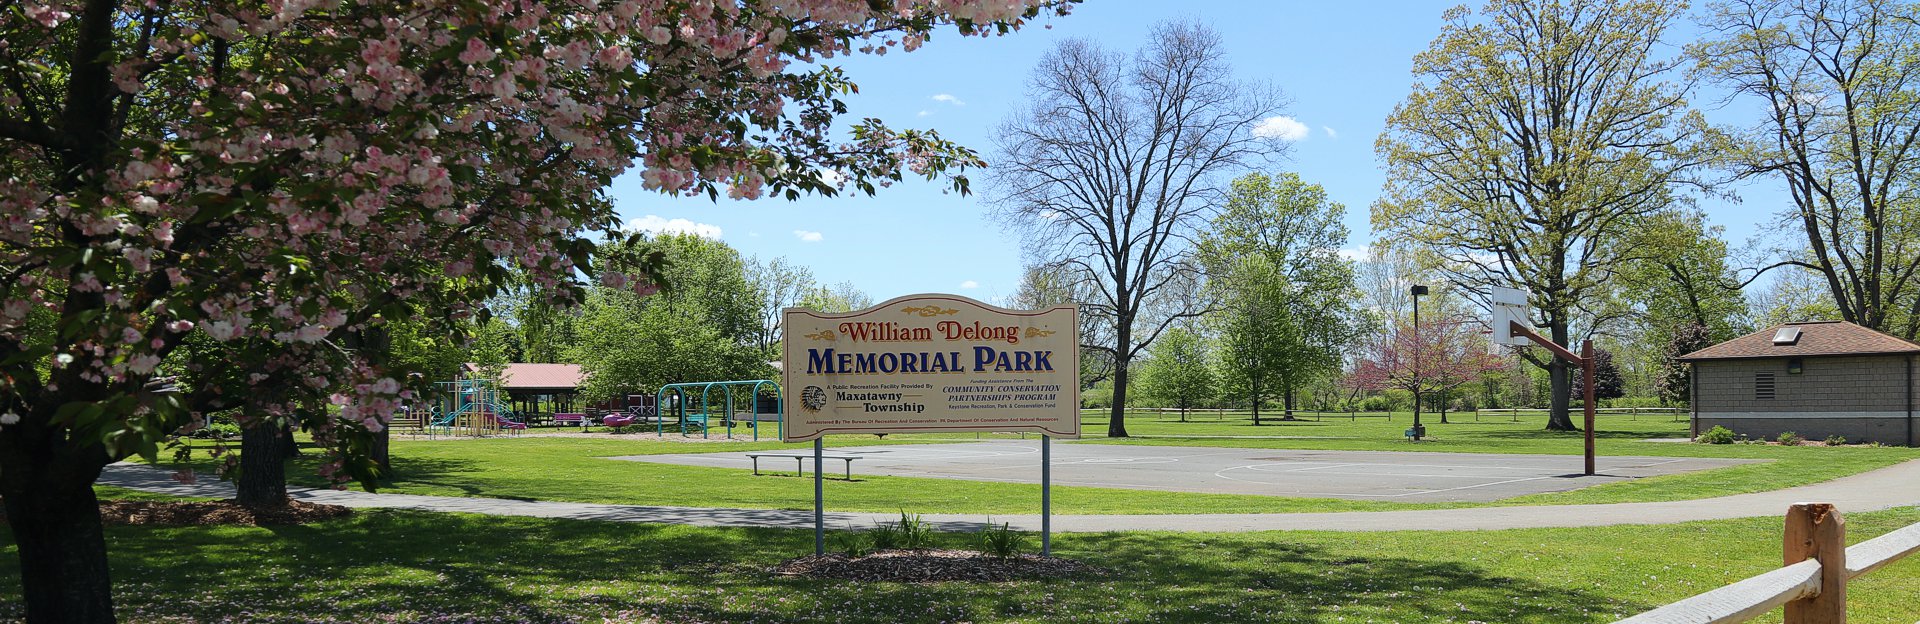 William Delong Memorial Park